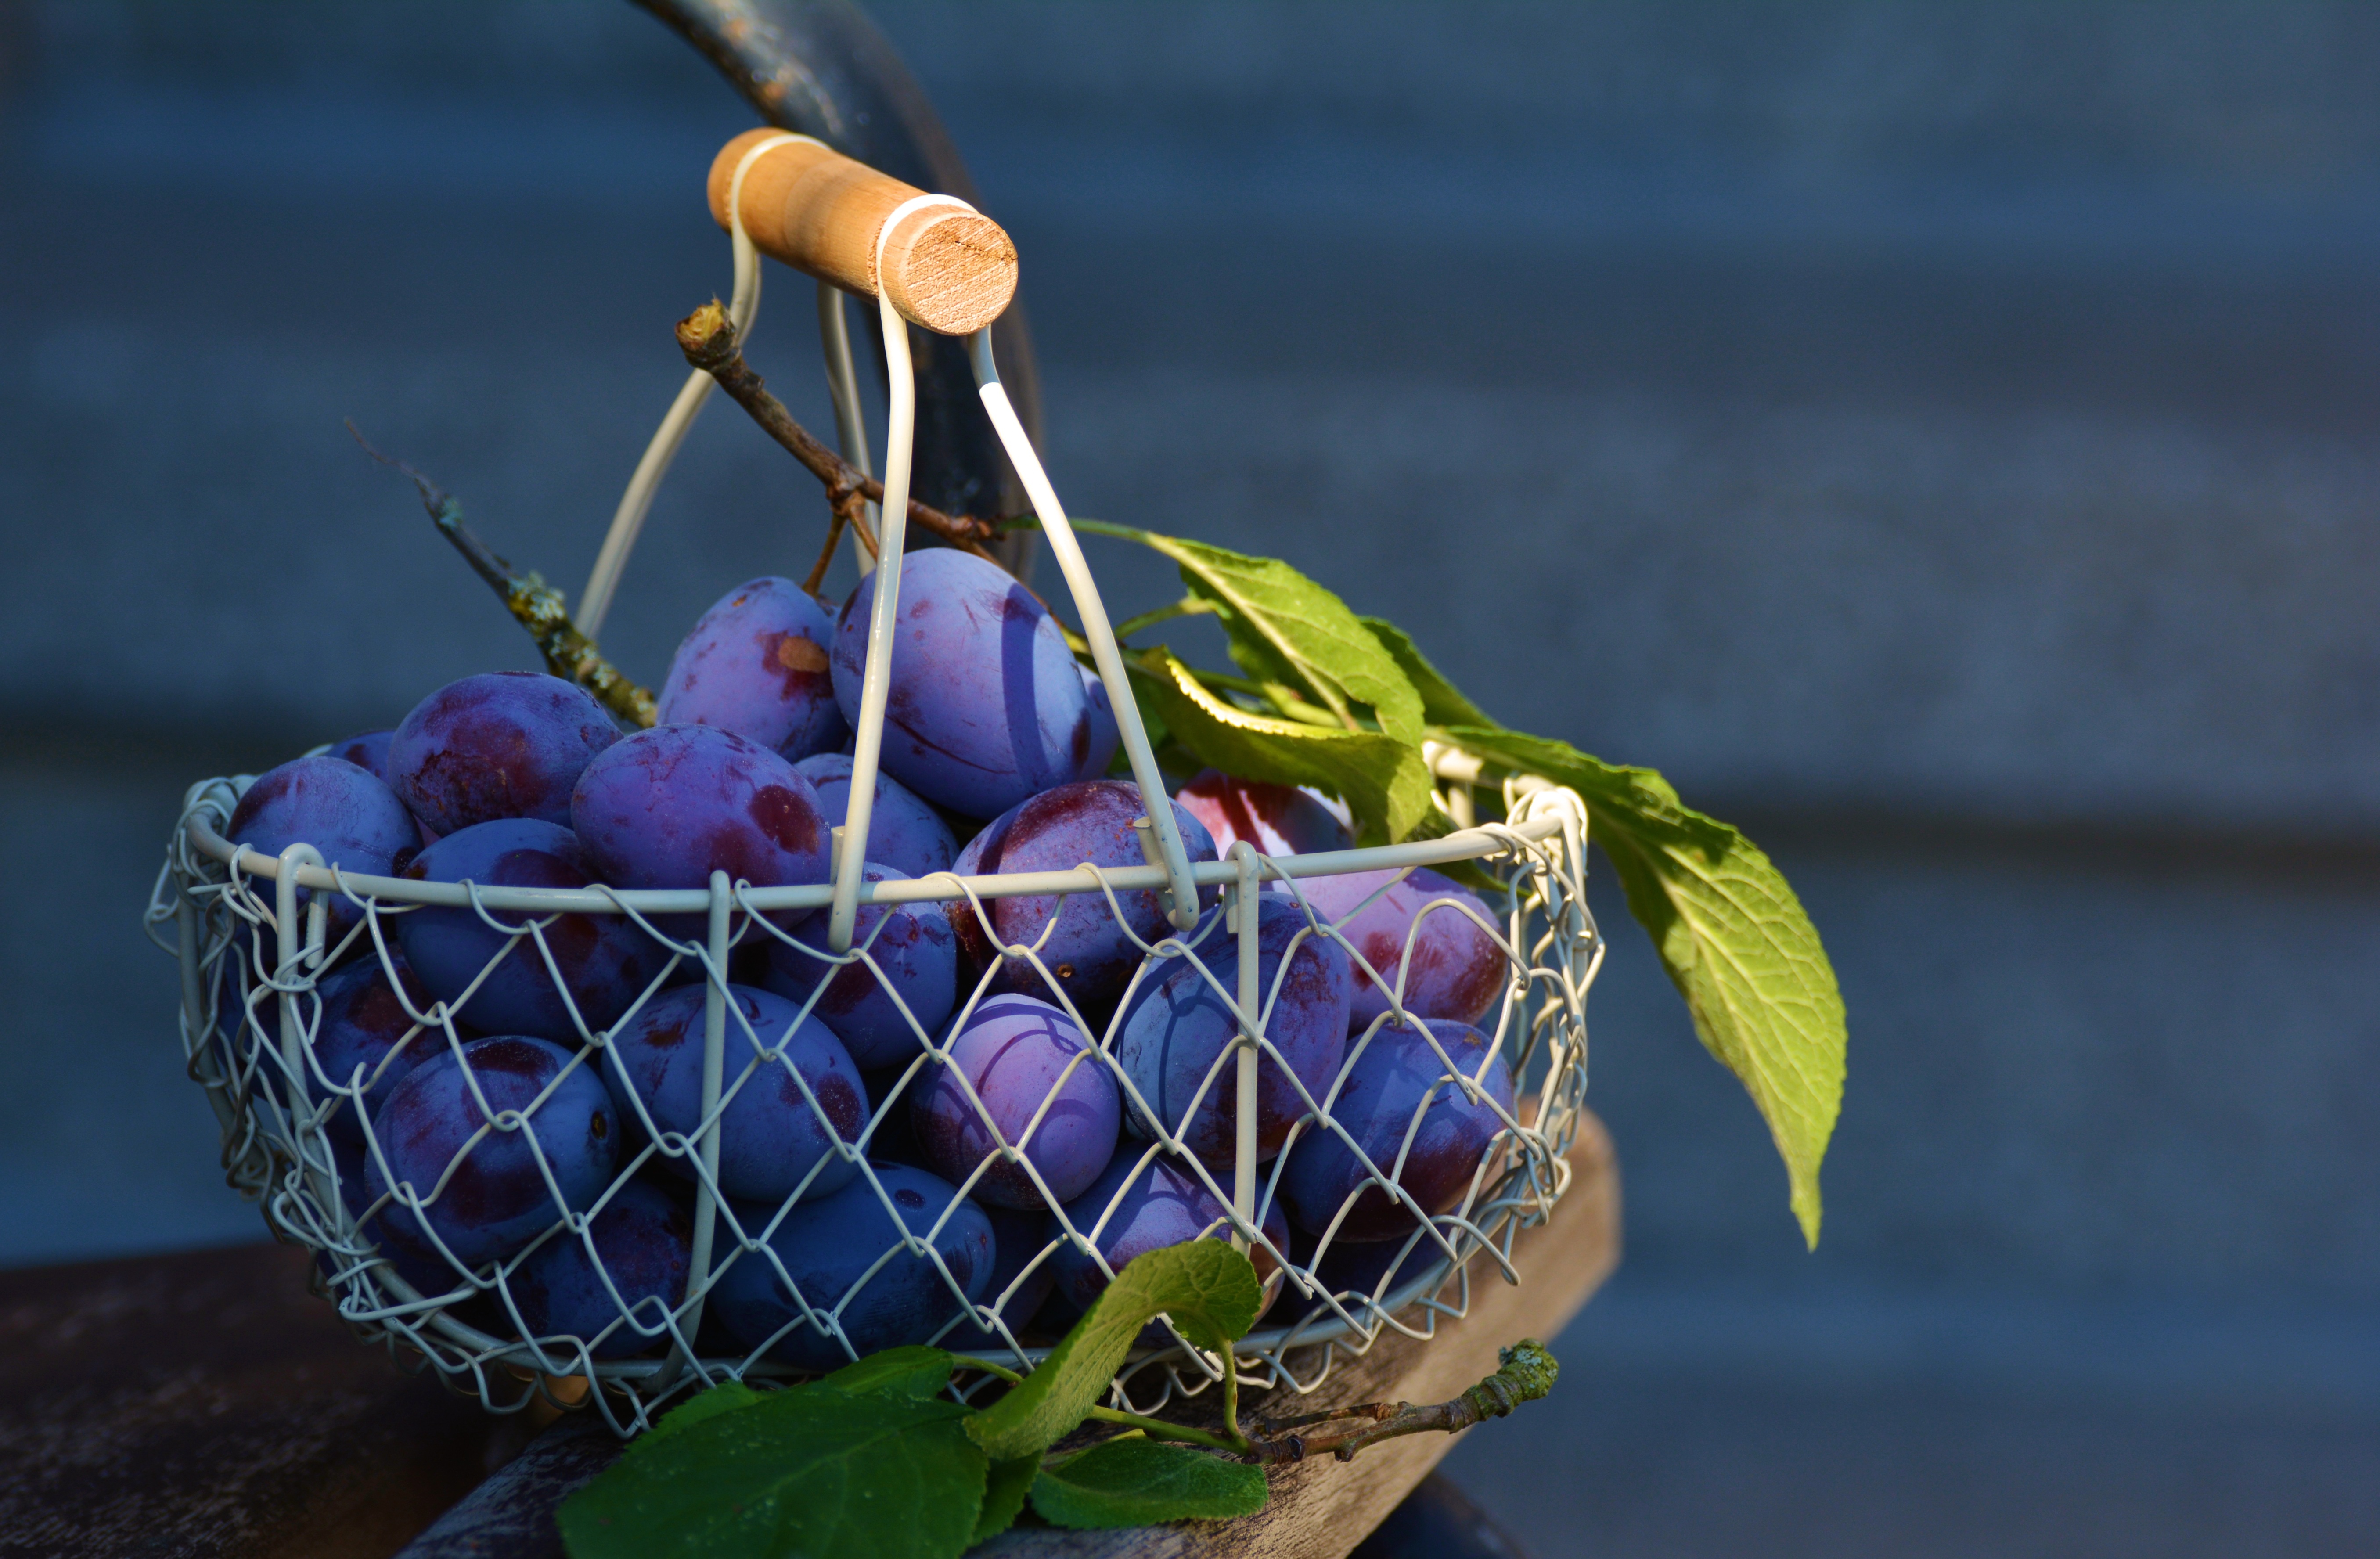 Basket Fruit Plum 5421x3551